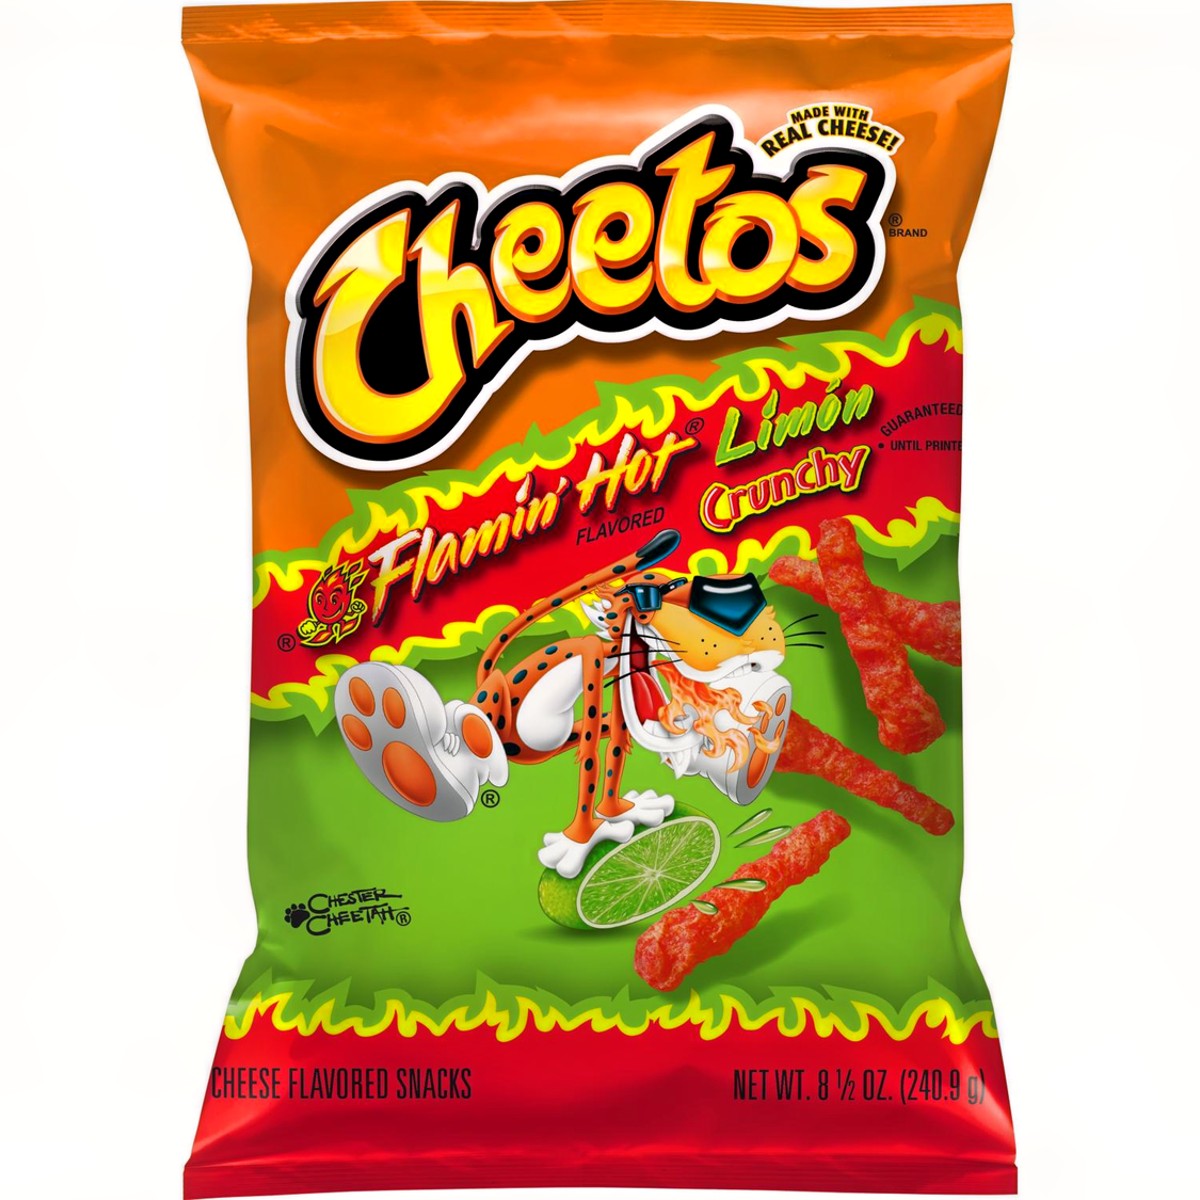 Cheetos XXTRA Flamin Hot Crunchy 8.5oz (4pk)